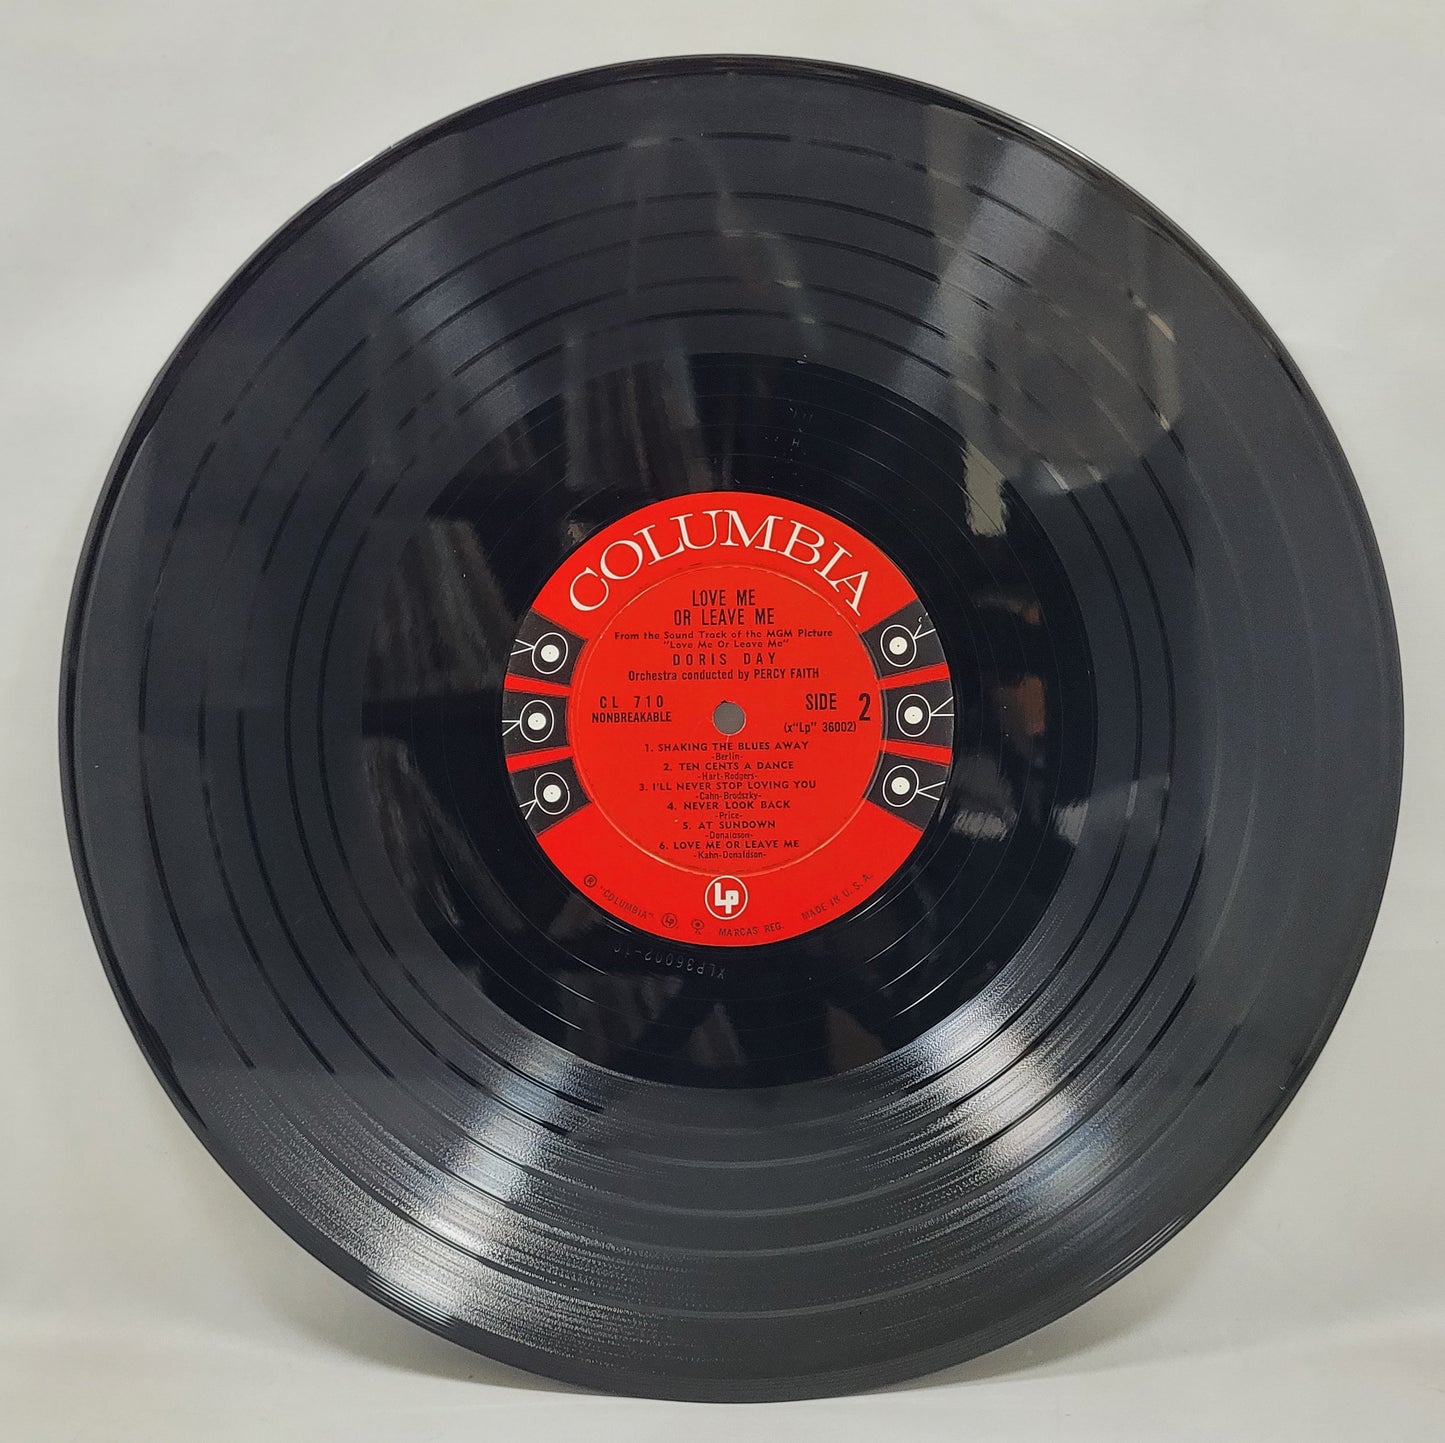 Doris Day - Love Me or Leave Me [Mono] [Vinyl Record LP]